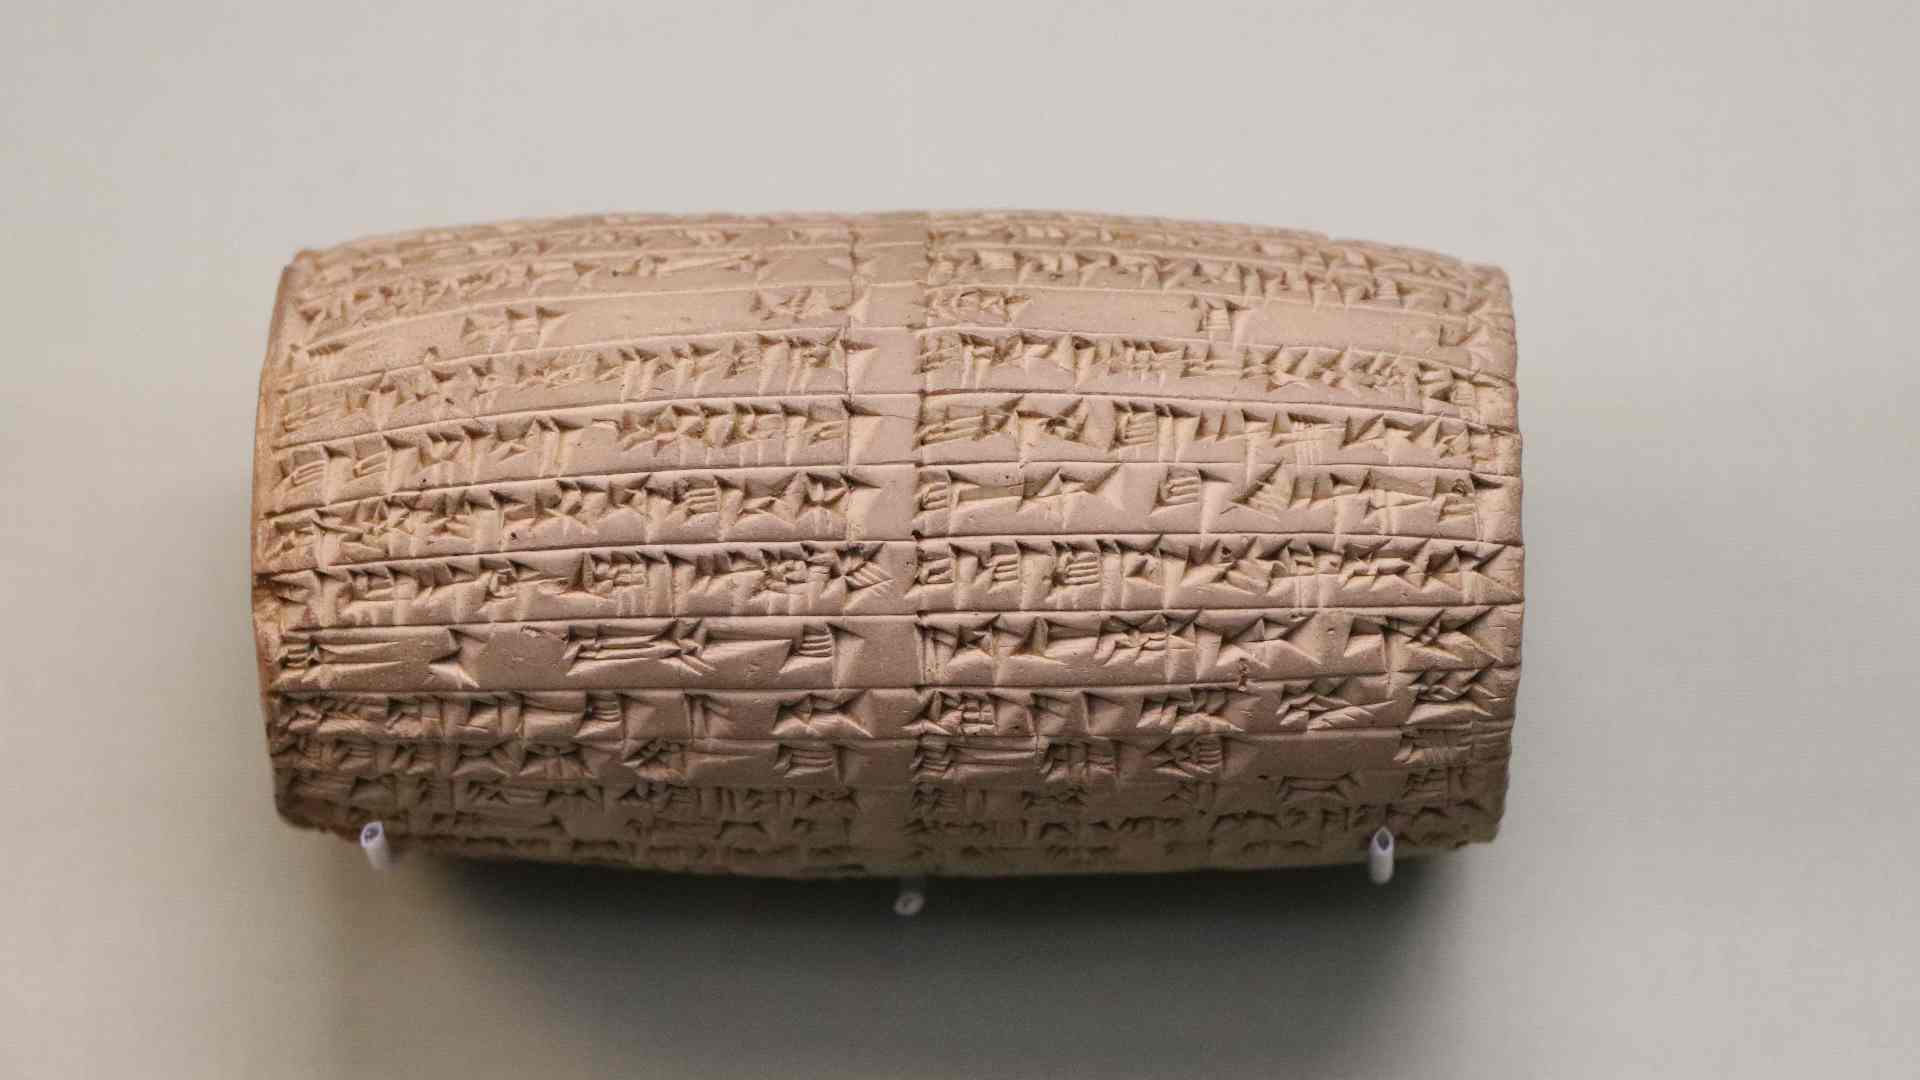 Cylindre de Nabonide - cite Belchatsar - British Museum - Photo P. Vauclair